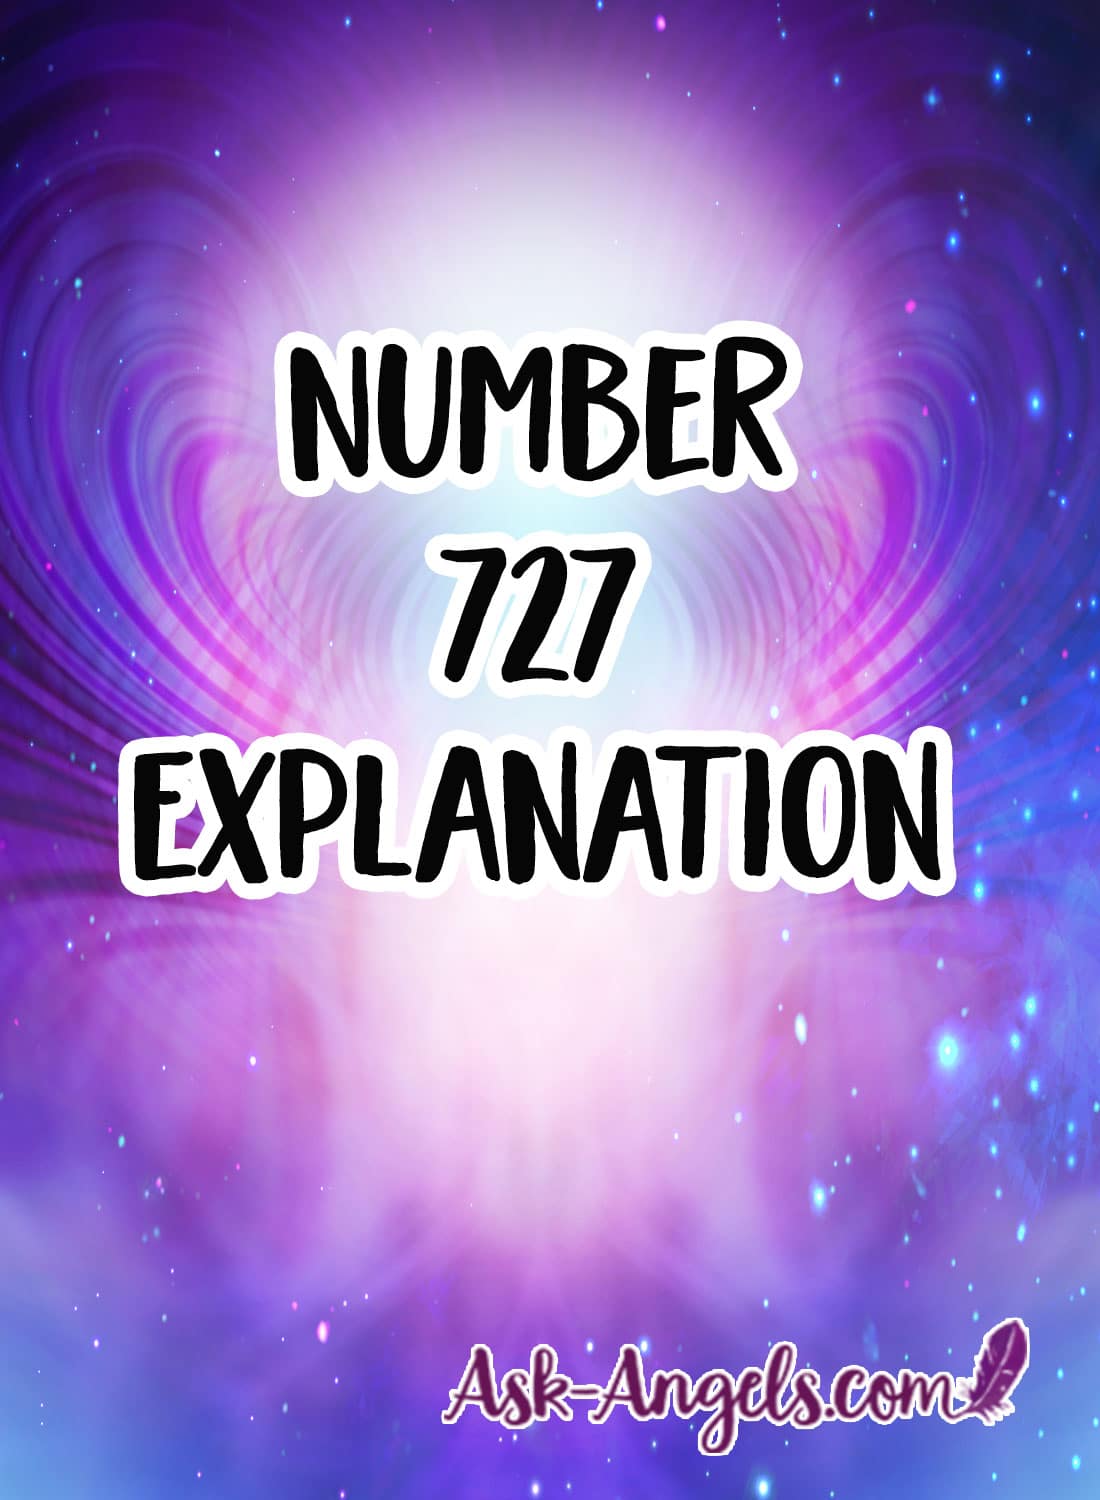 nummer 727 forklaring